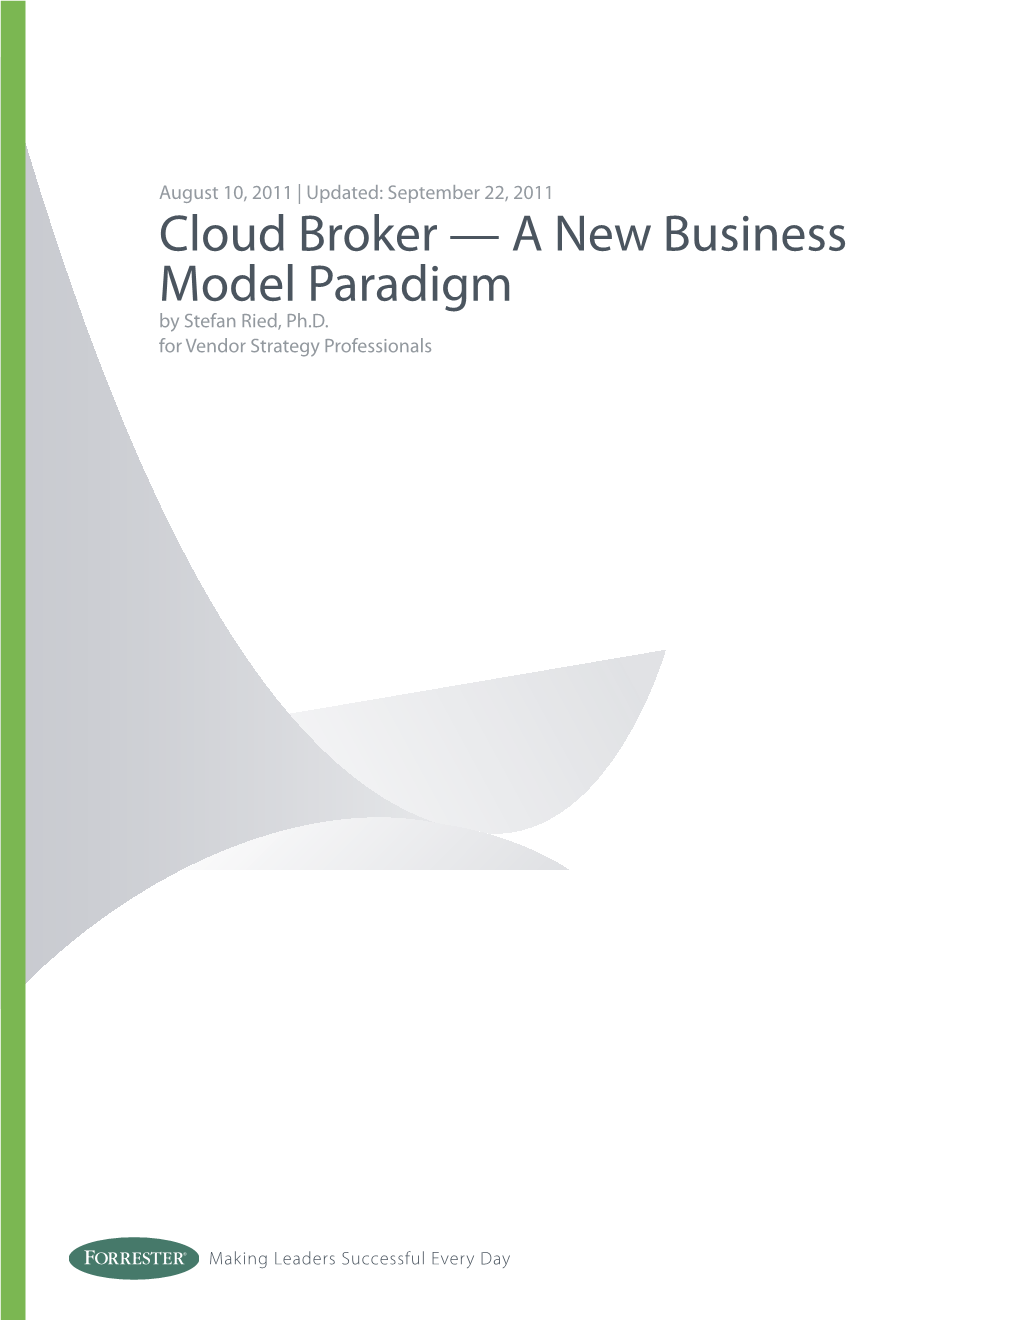 Cloud Broker — a New Business Model Paradigm by Stefan Ried, Ph.D